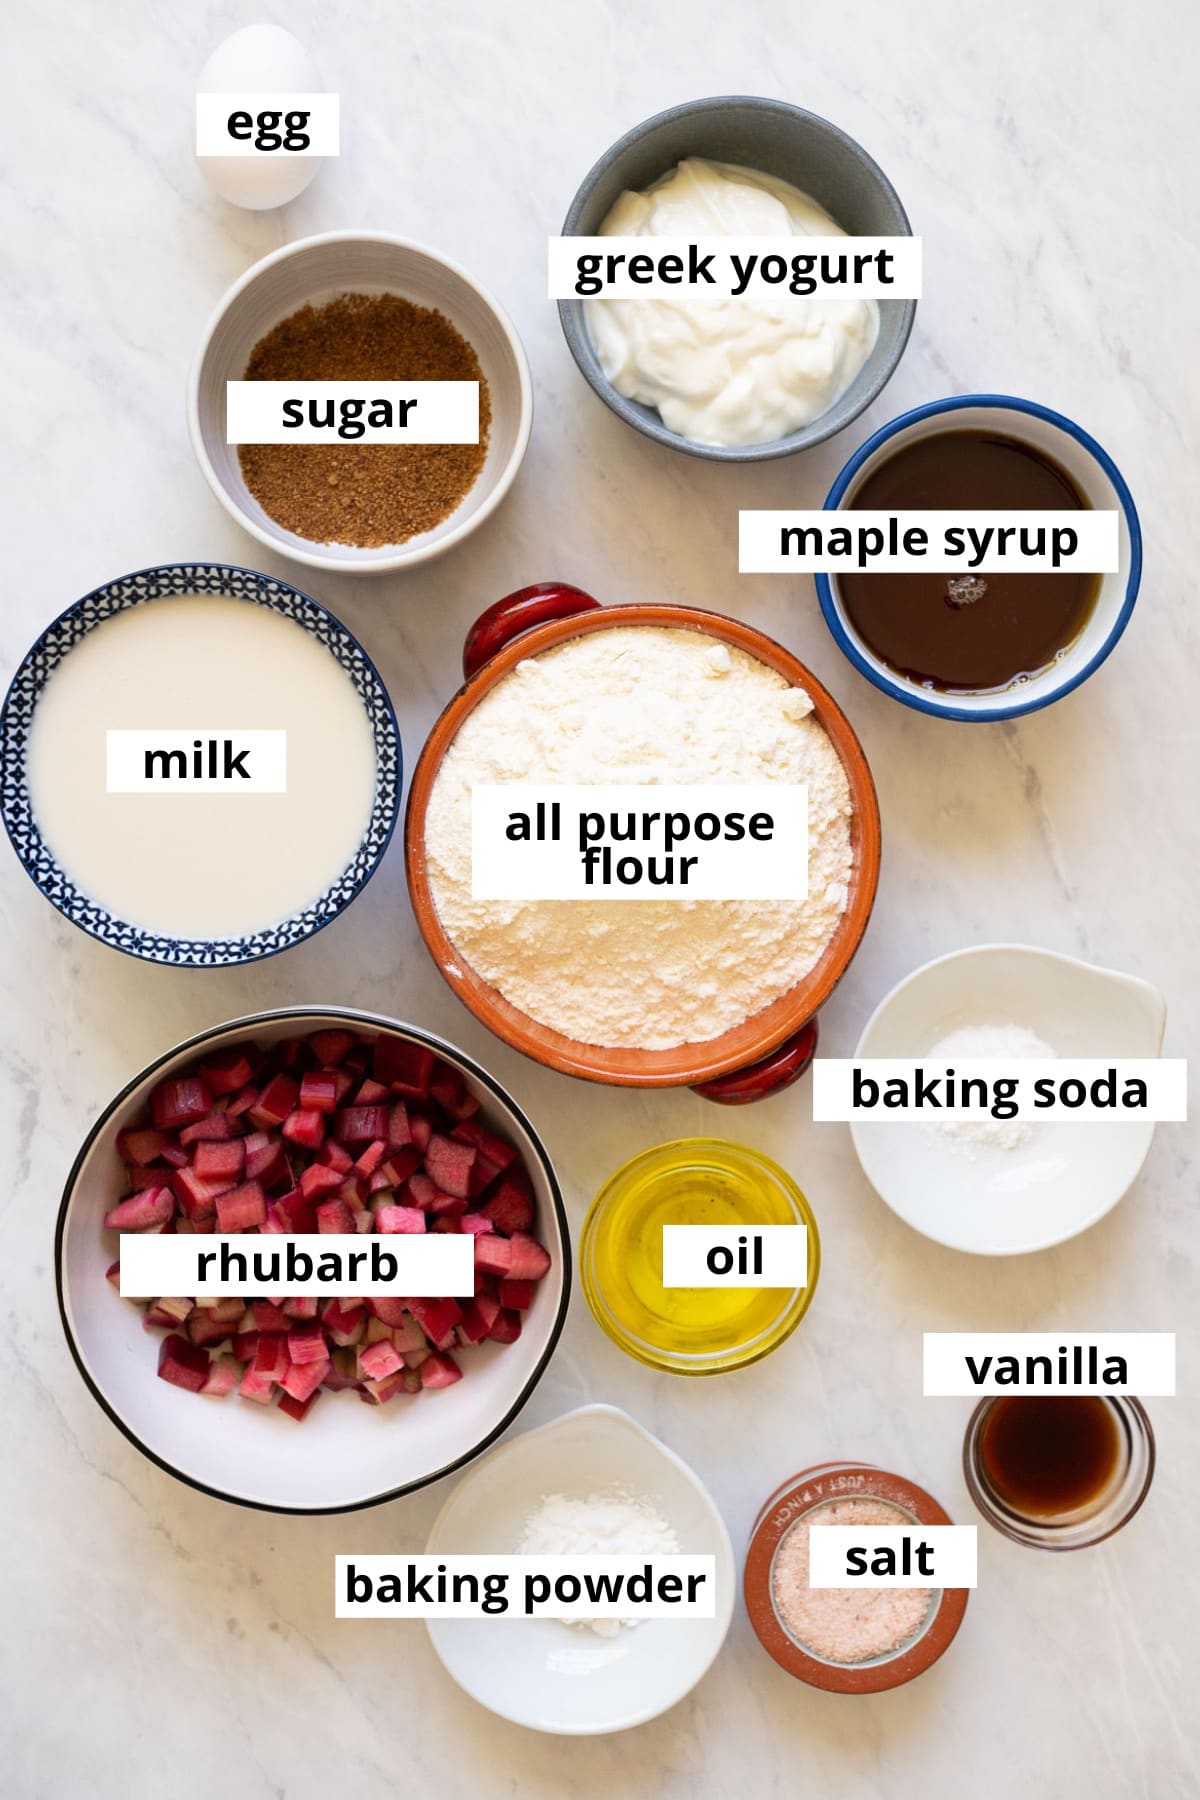 Rhubarb, egg, milk, Greek yogurt, all purpose flour, maple syrup, sugar, baking soda, baking powder, oil, vanilla, salt.